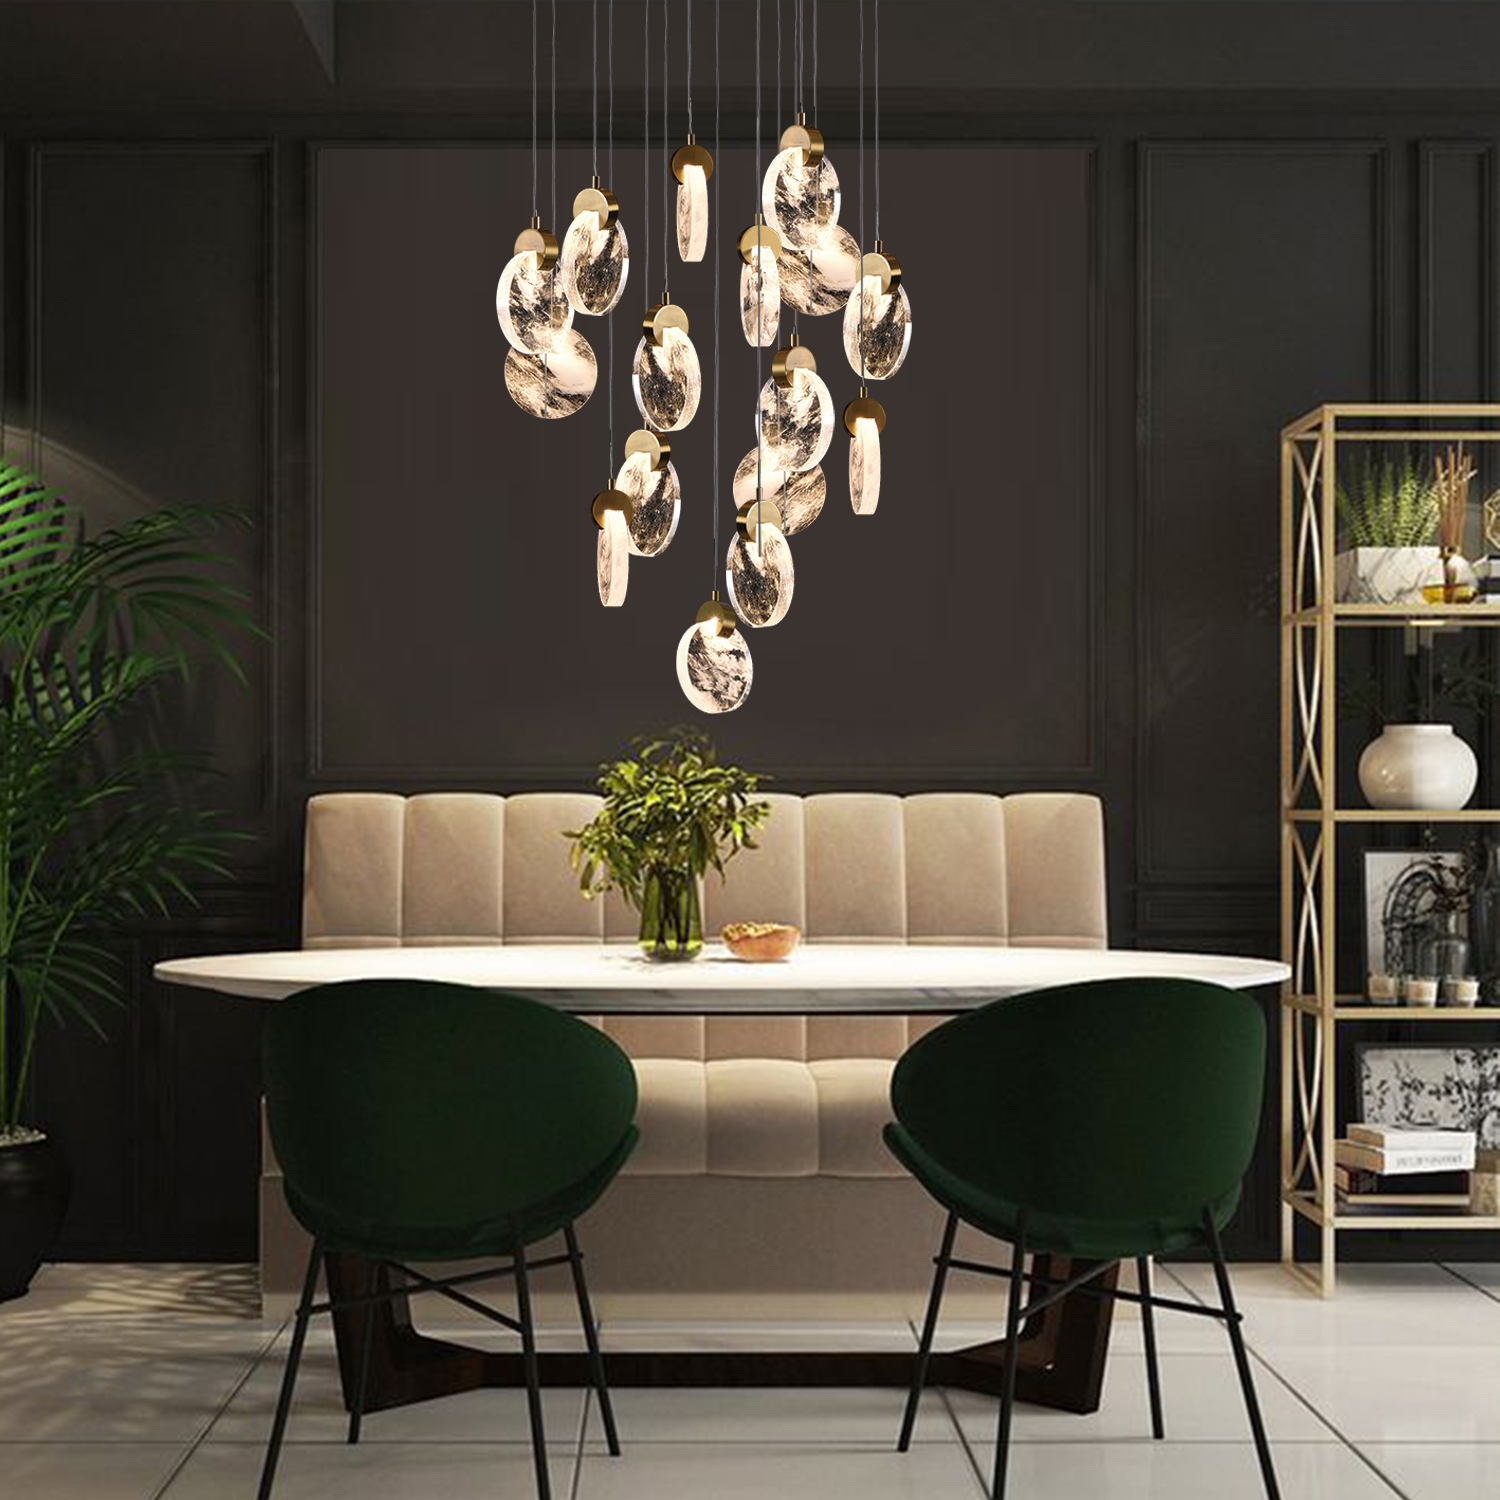  Luxury Gold Crystal Lighting Metal Pendant Lamp 3W*6 LED Living Room Chandelier